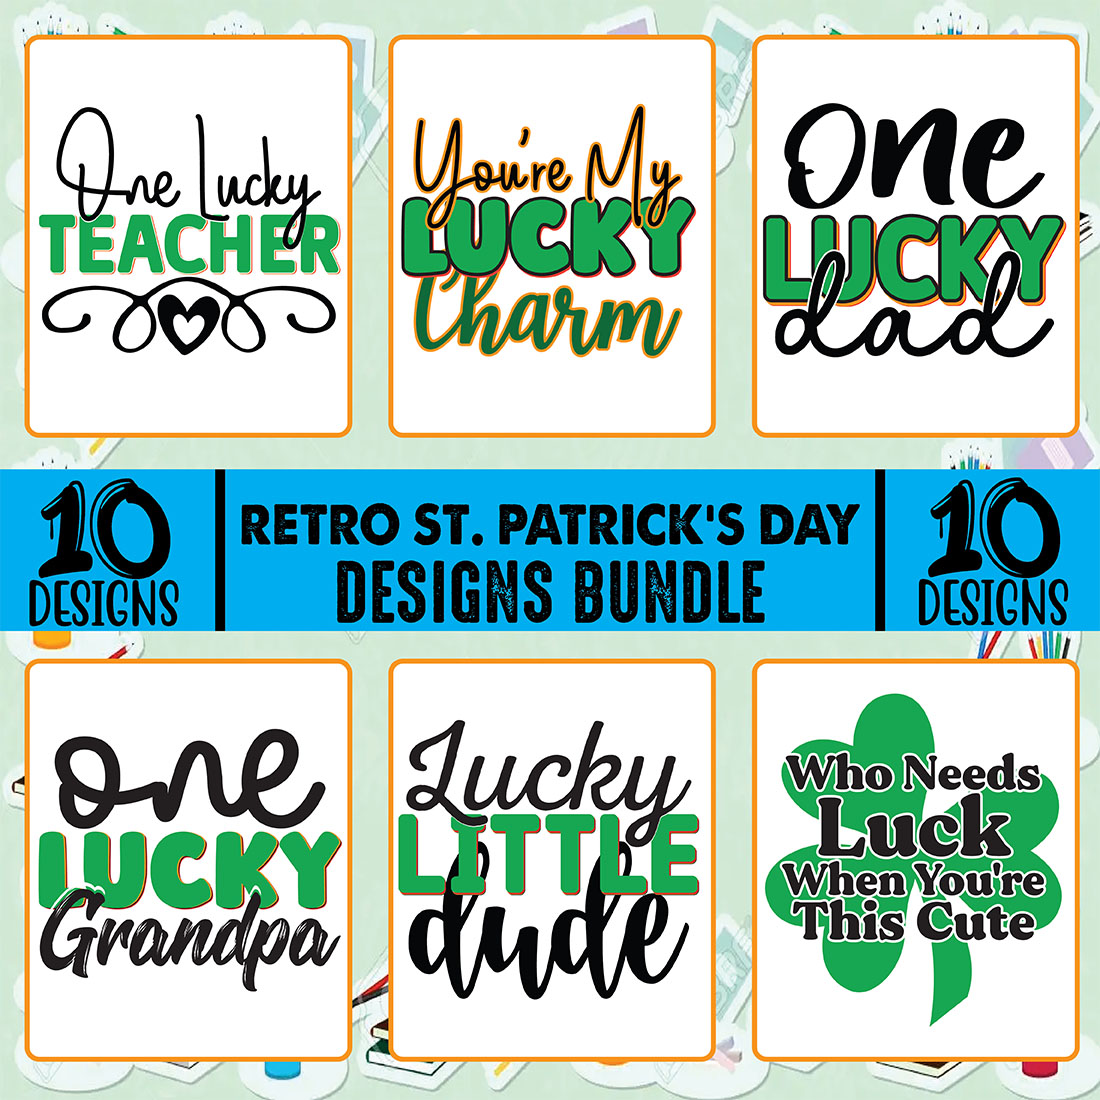 Retro St. Patrick's Day Designs Bundle cover image.